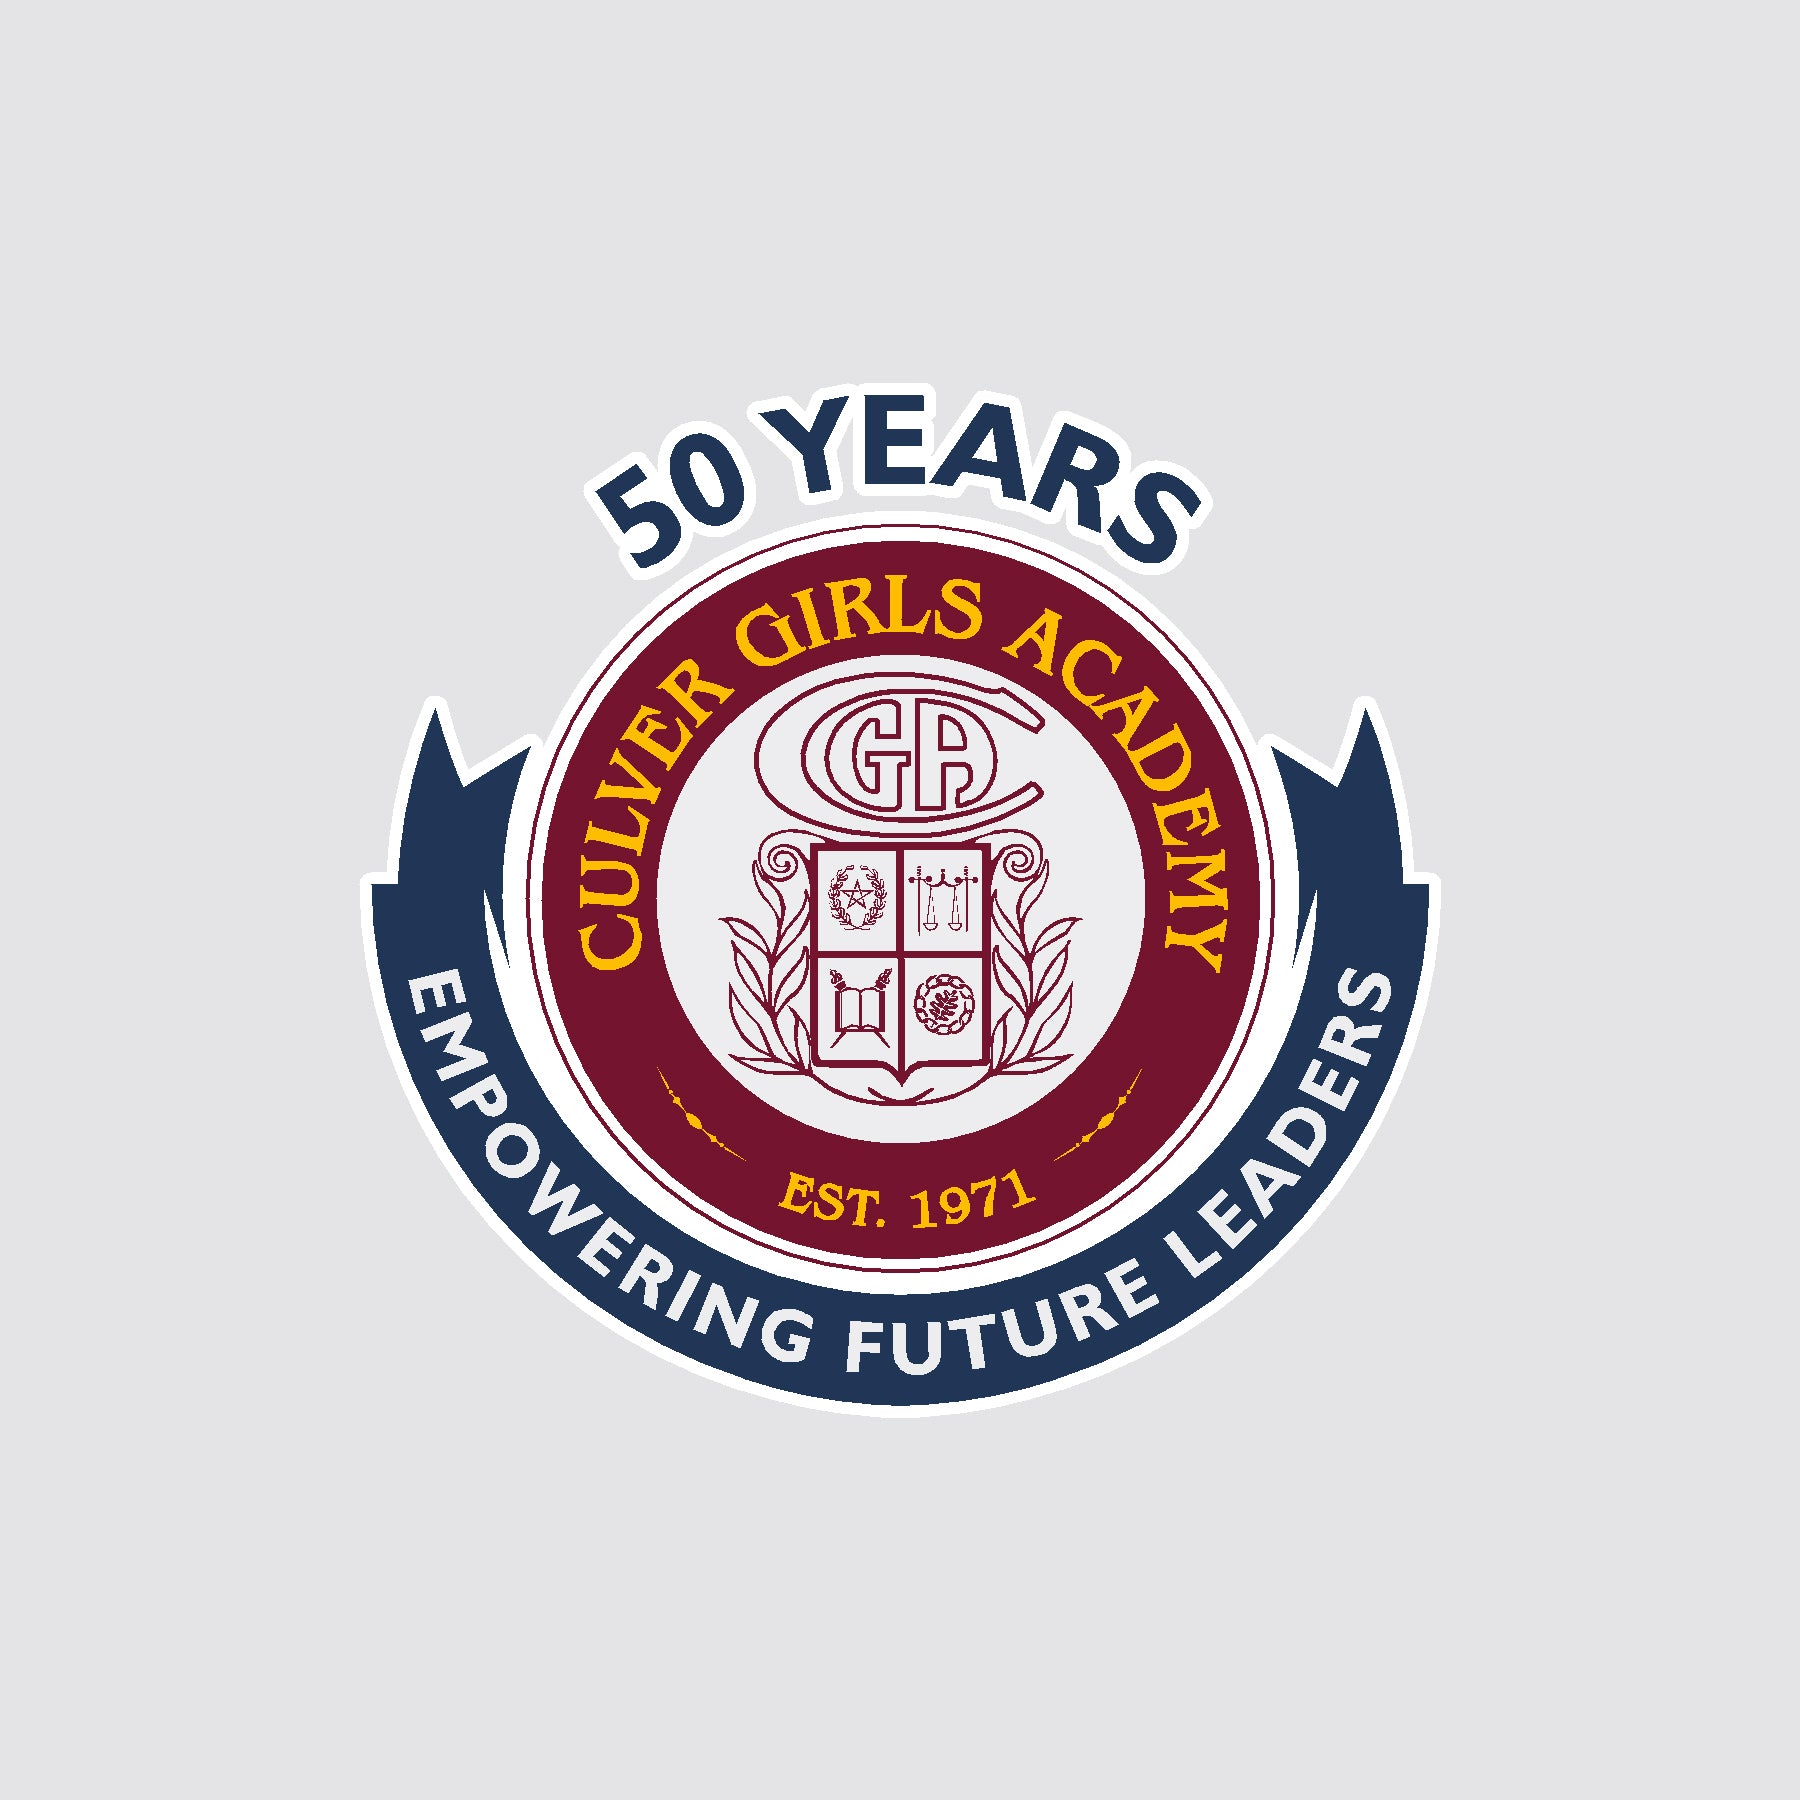 Culver Girls Academy 50th Anniversary Seal